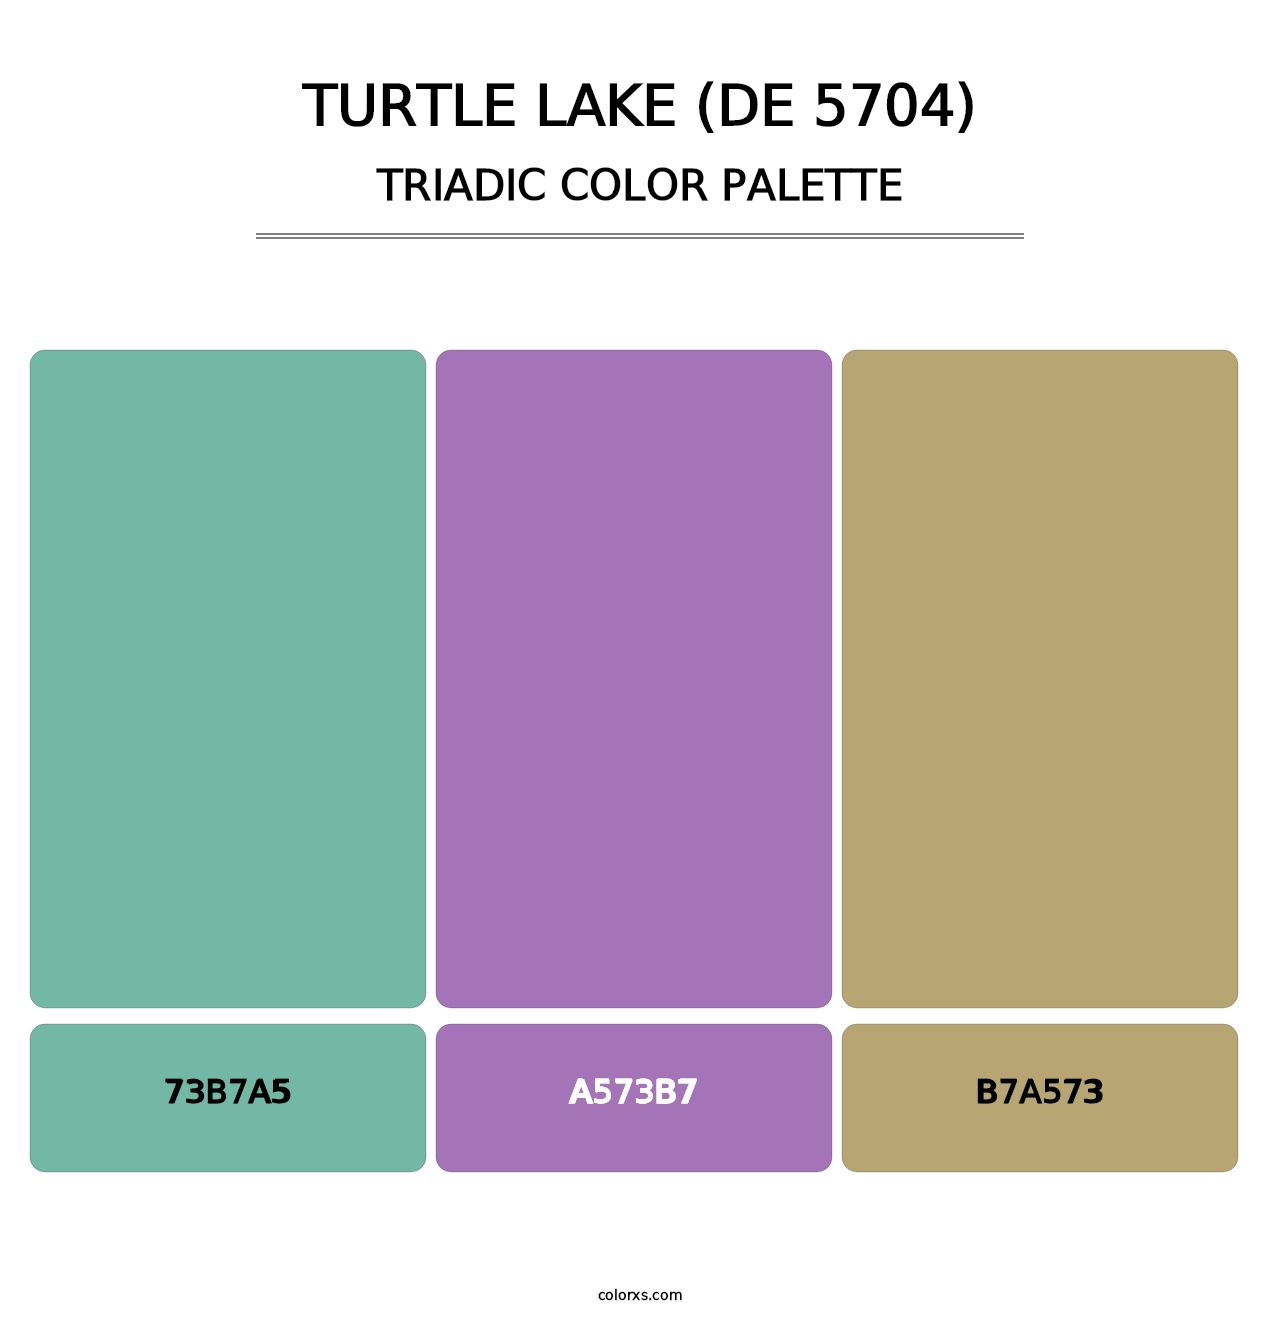 Turtle Lake (DE 5704) - Triadic Color Palette